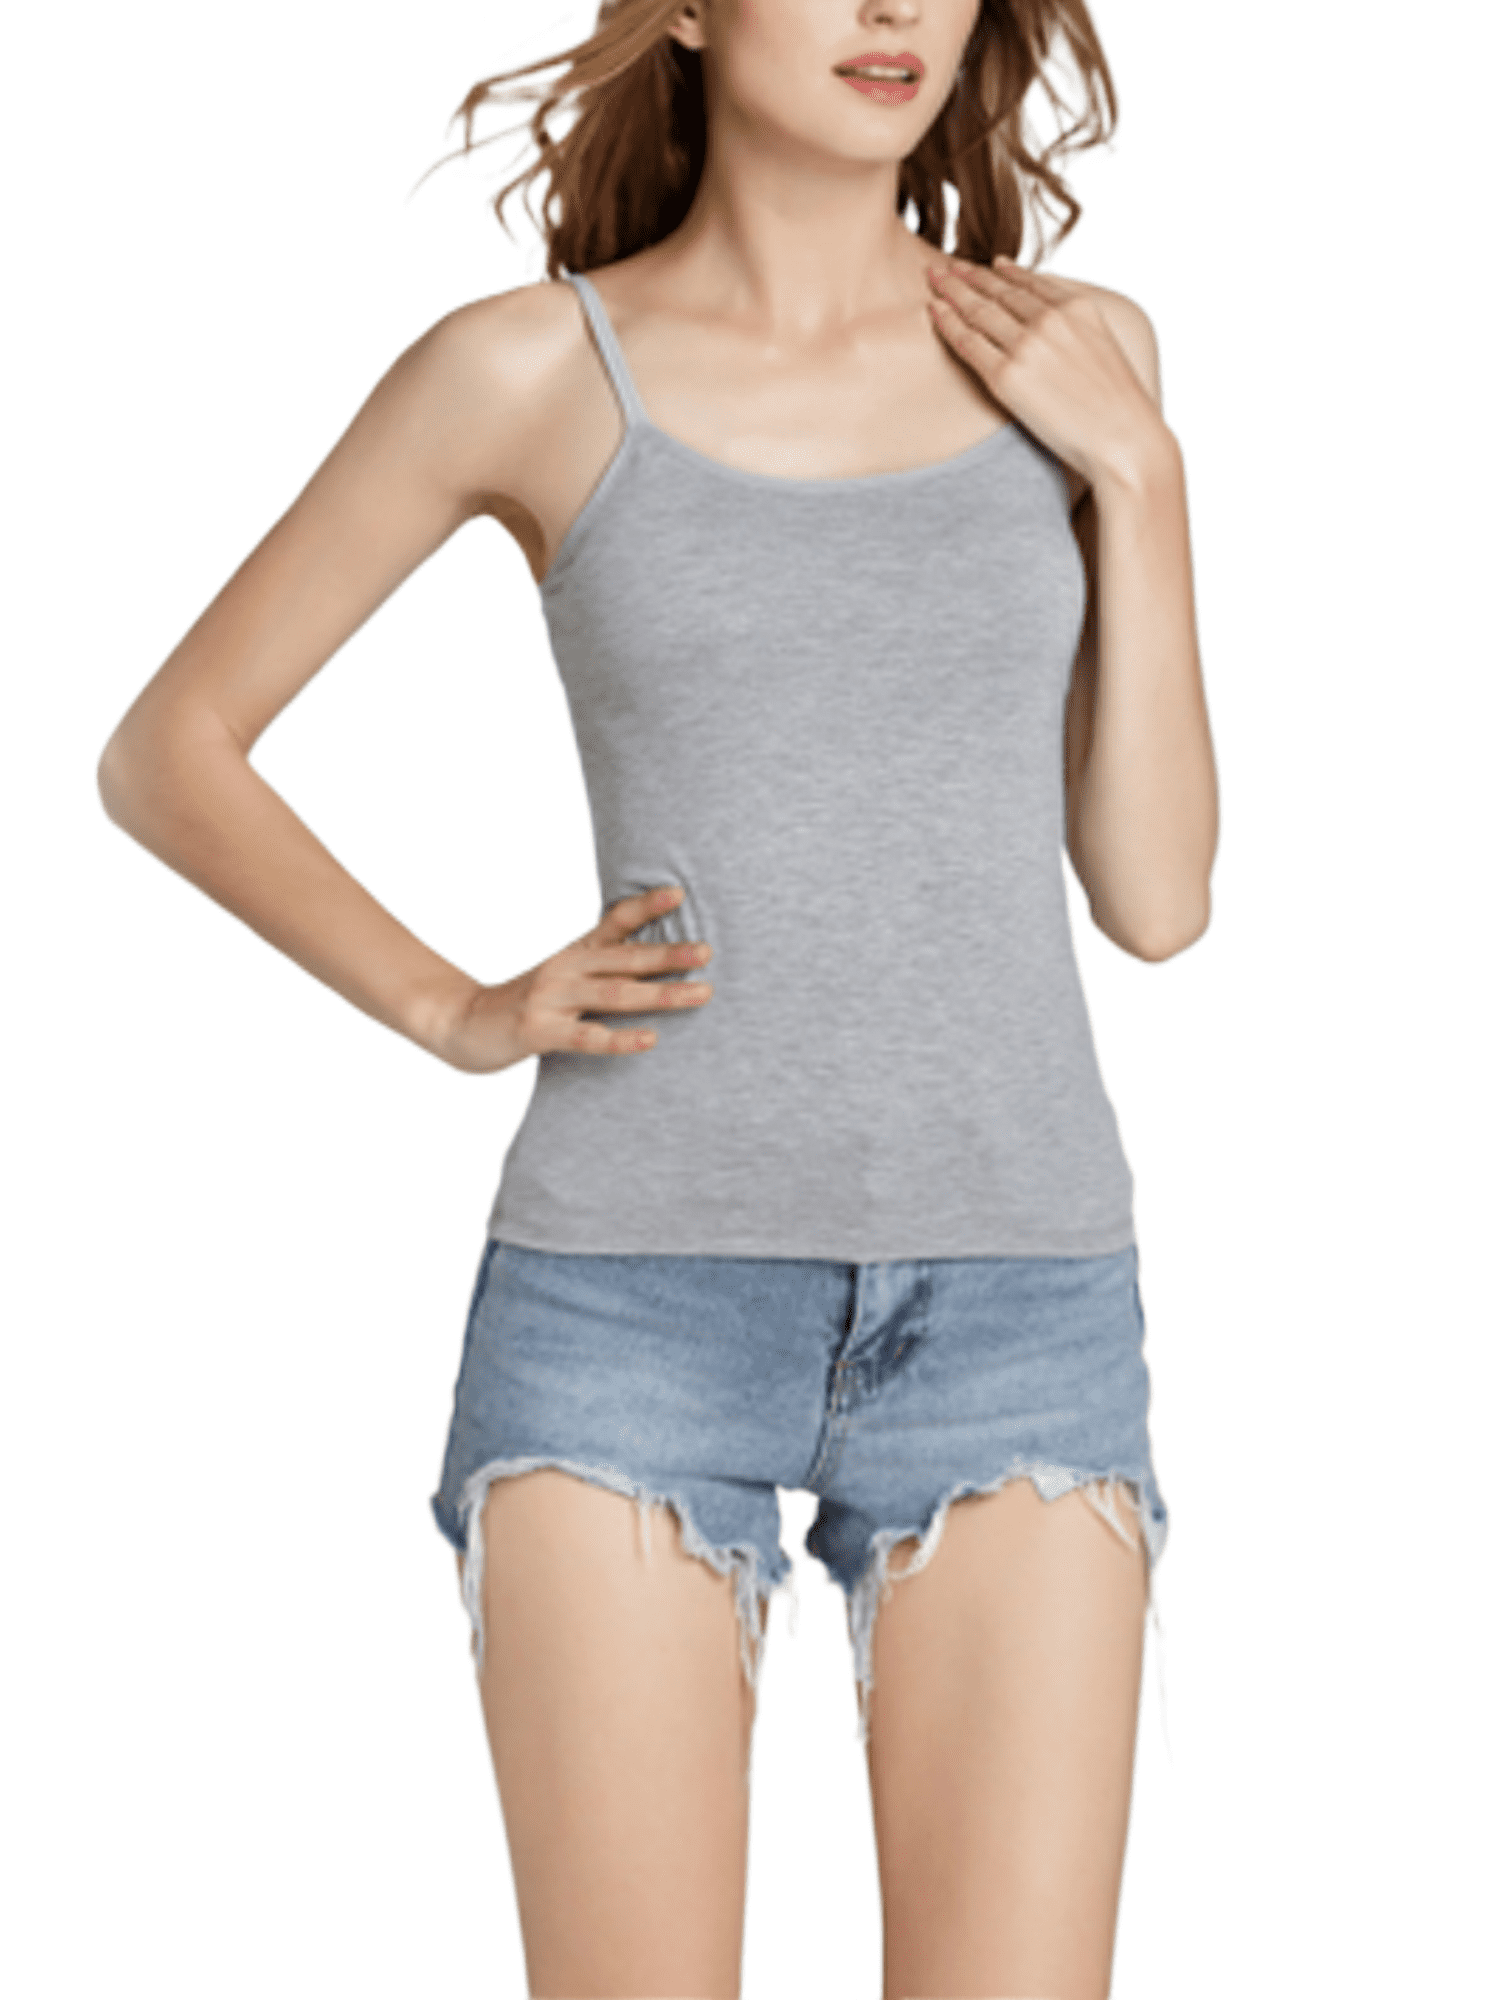 xkwyshop Womens Camisole with Shelf Bra Cotton Undershirts Adjustable Strap  Cami Spaghetti Strap Tank Tops Nude L 